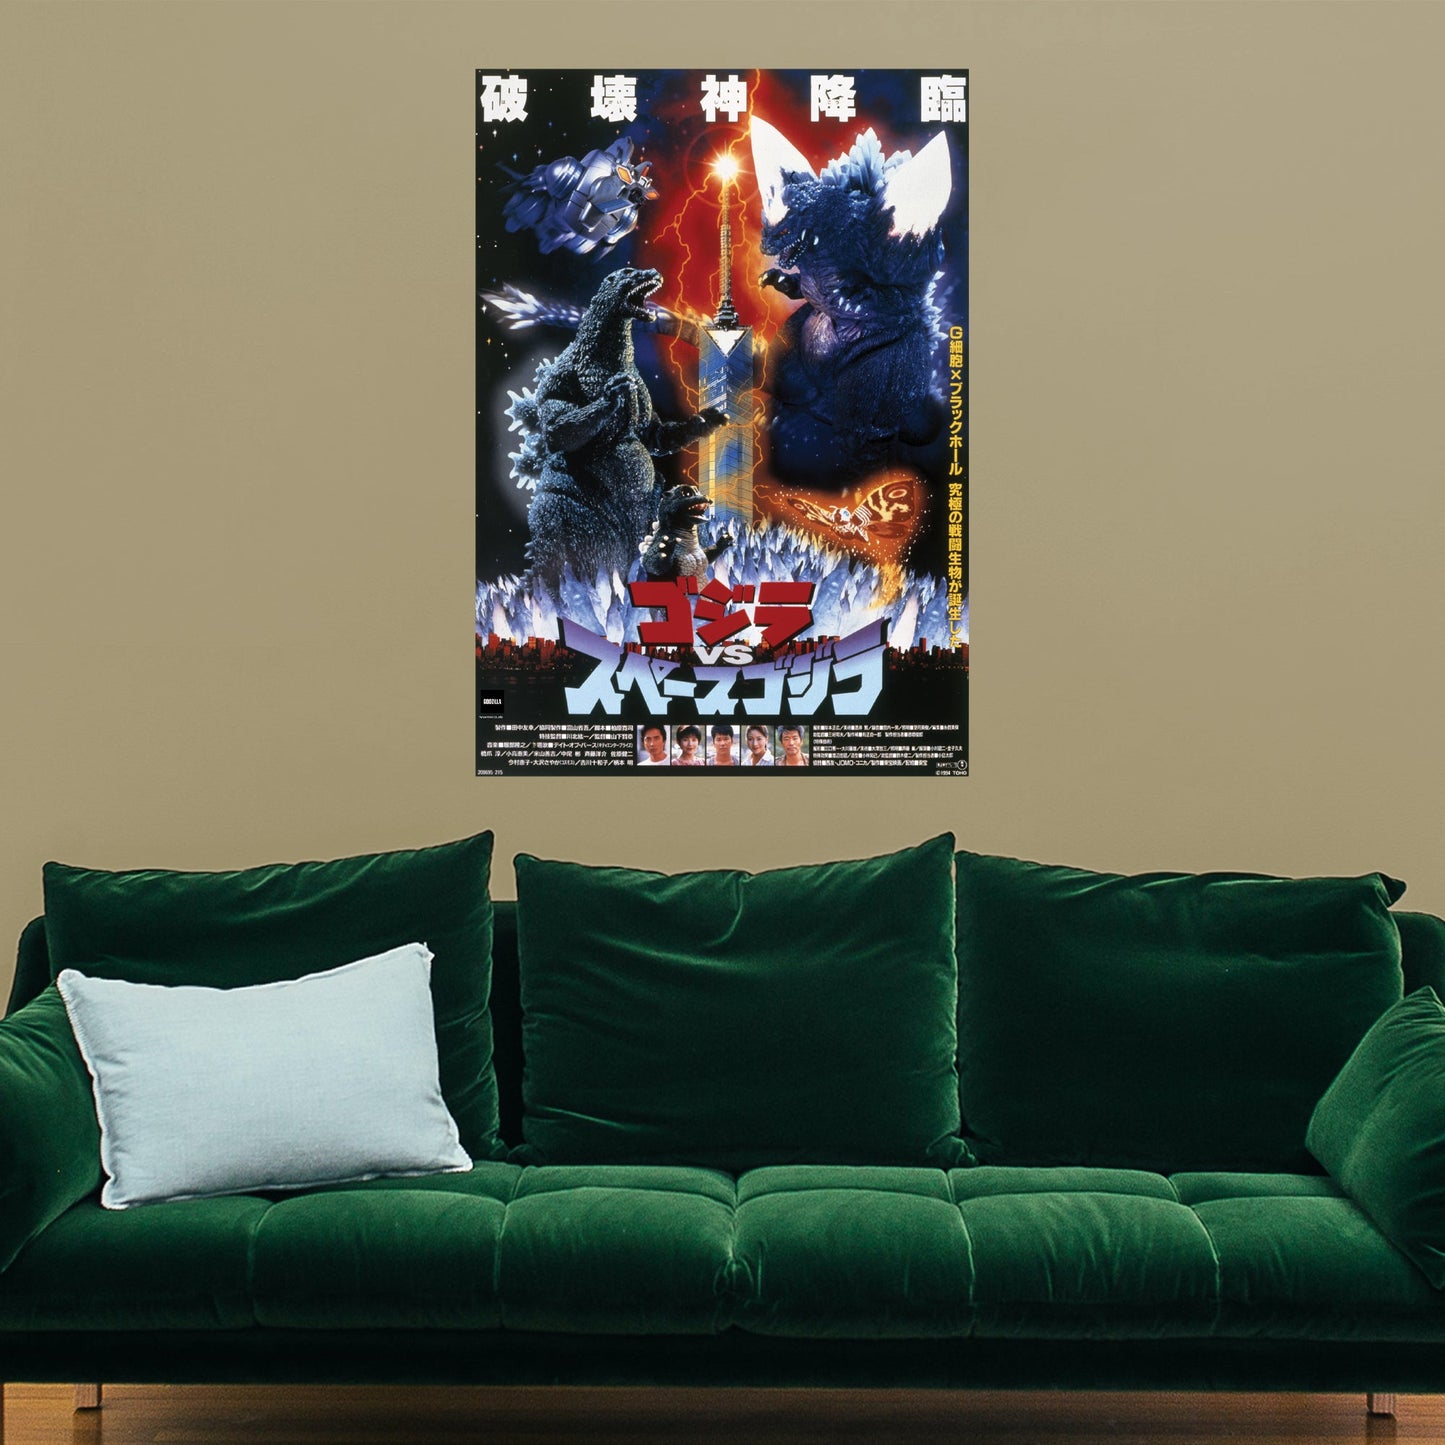 Godzilla: Godzilla vs Space Godzilla (1994) Movie Poster Mural - Officially Licensed Toho Removable Adhesive Decal